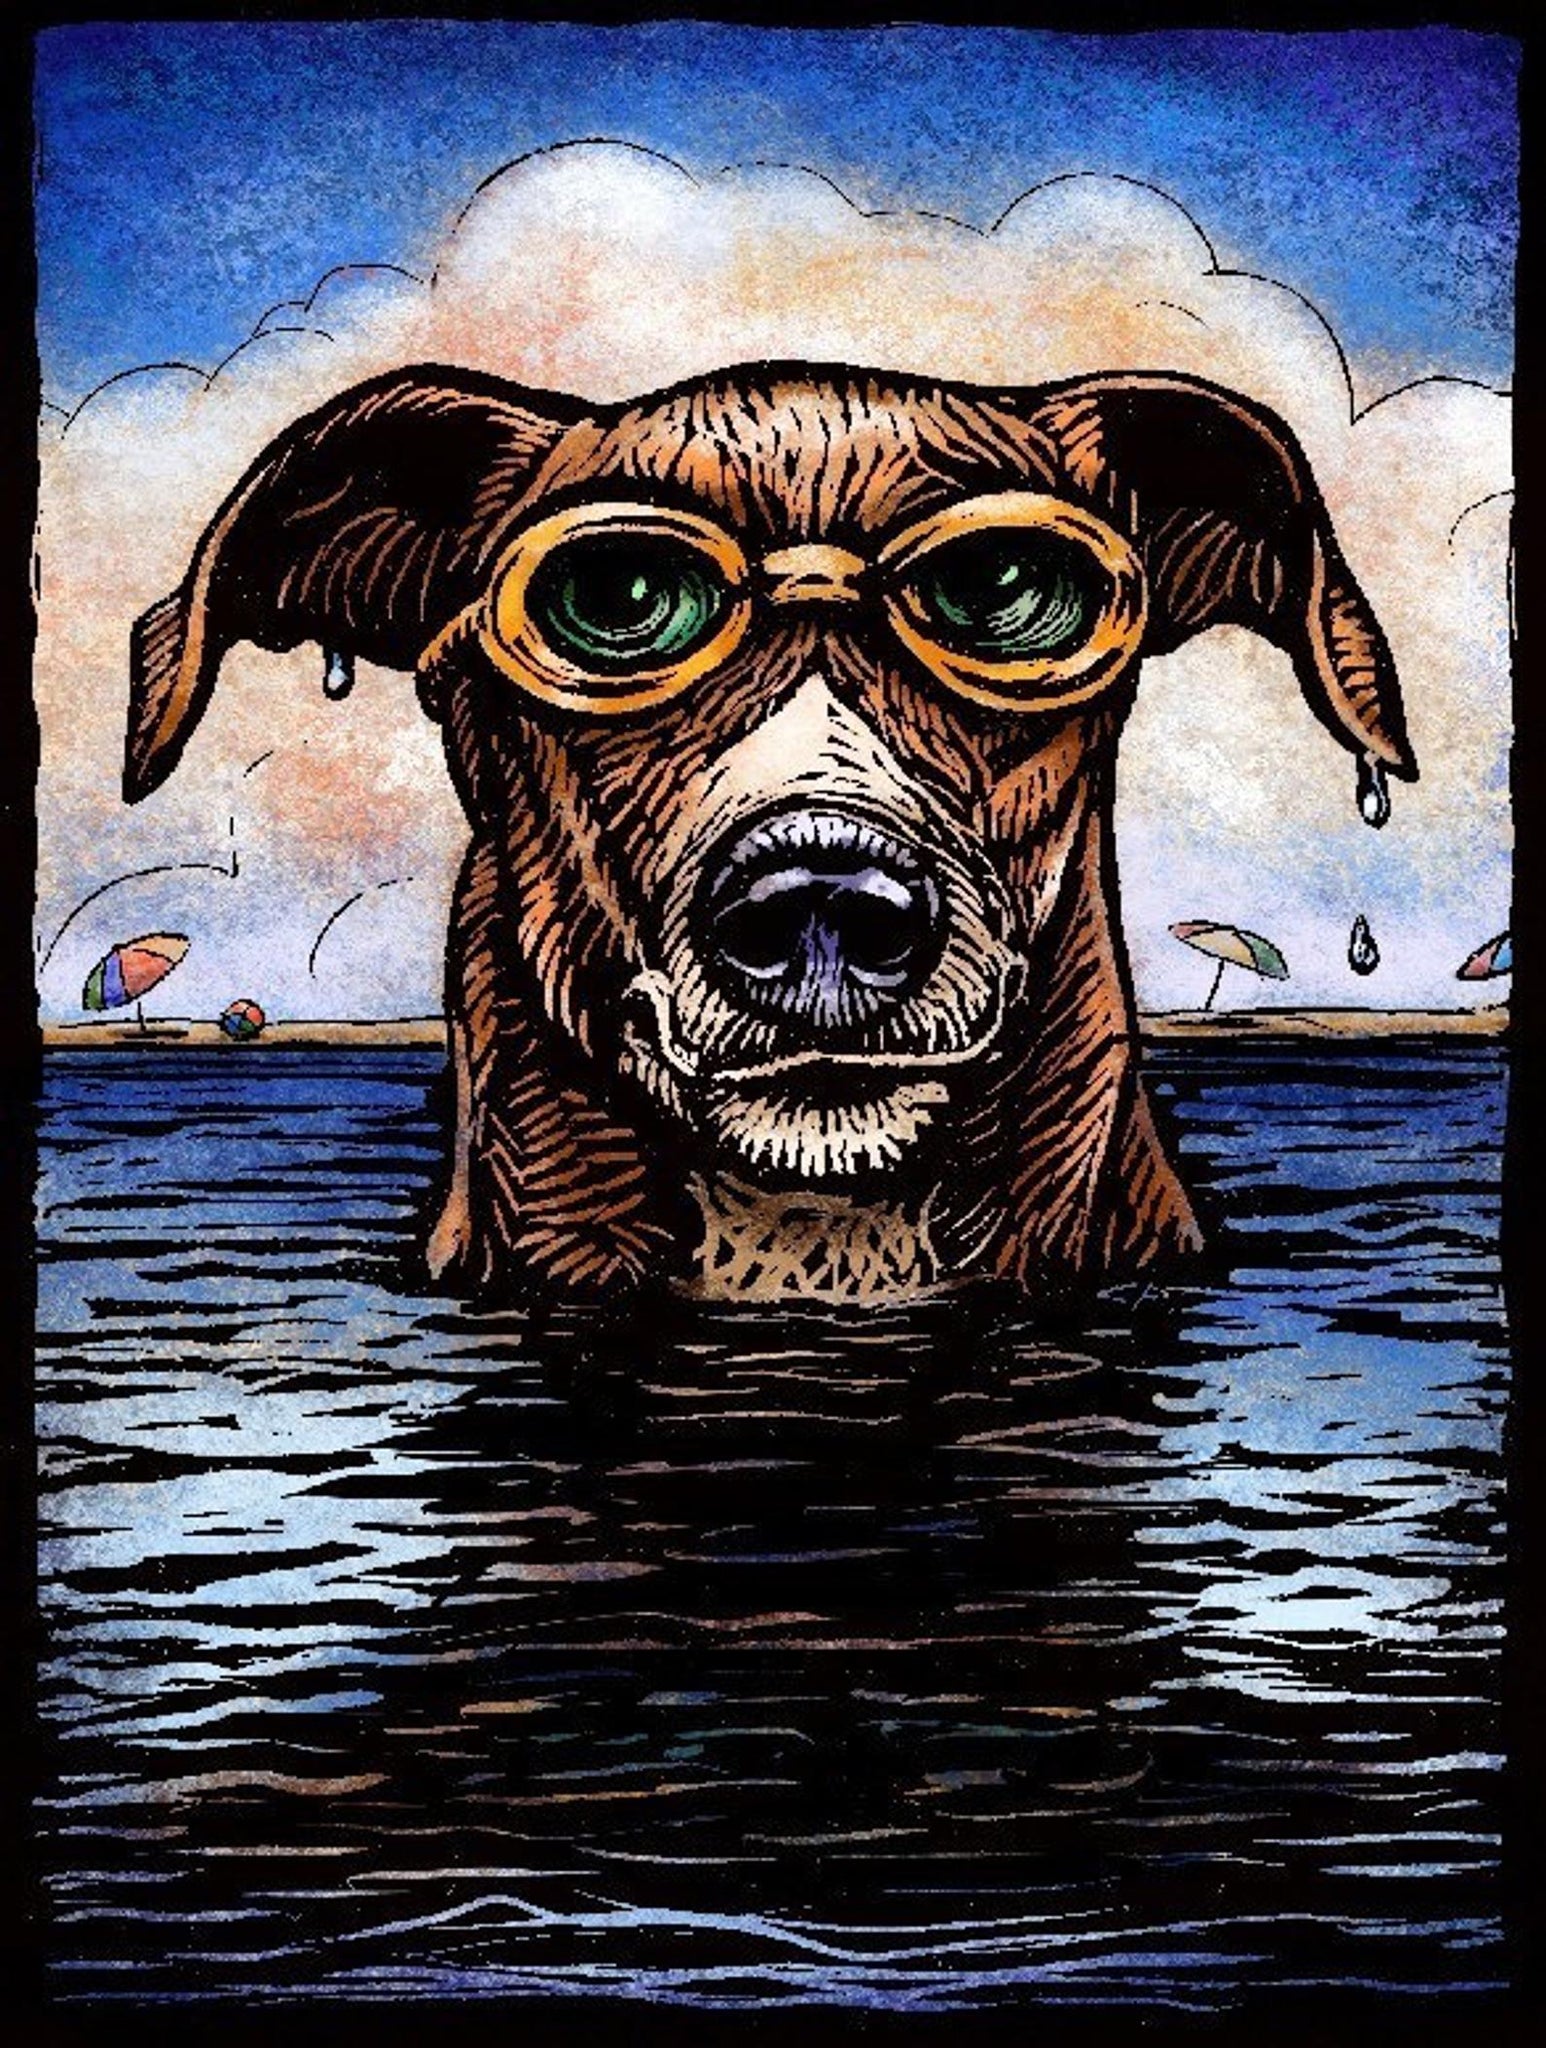 Dog Paddle 8 x 10" print